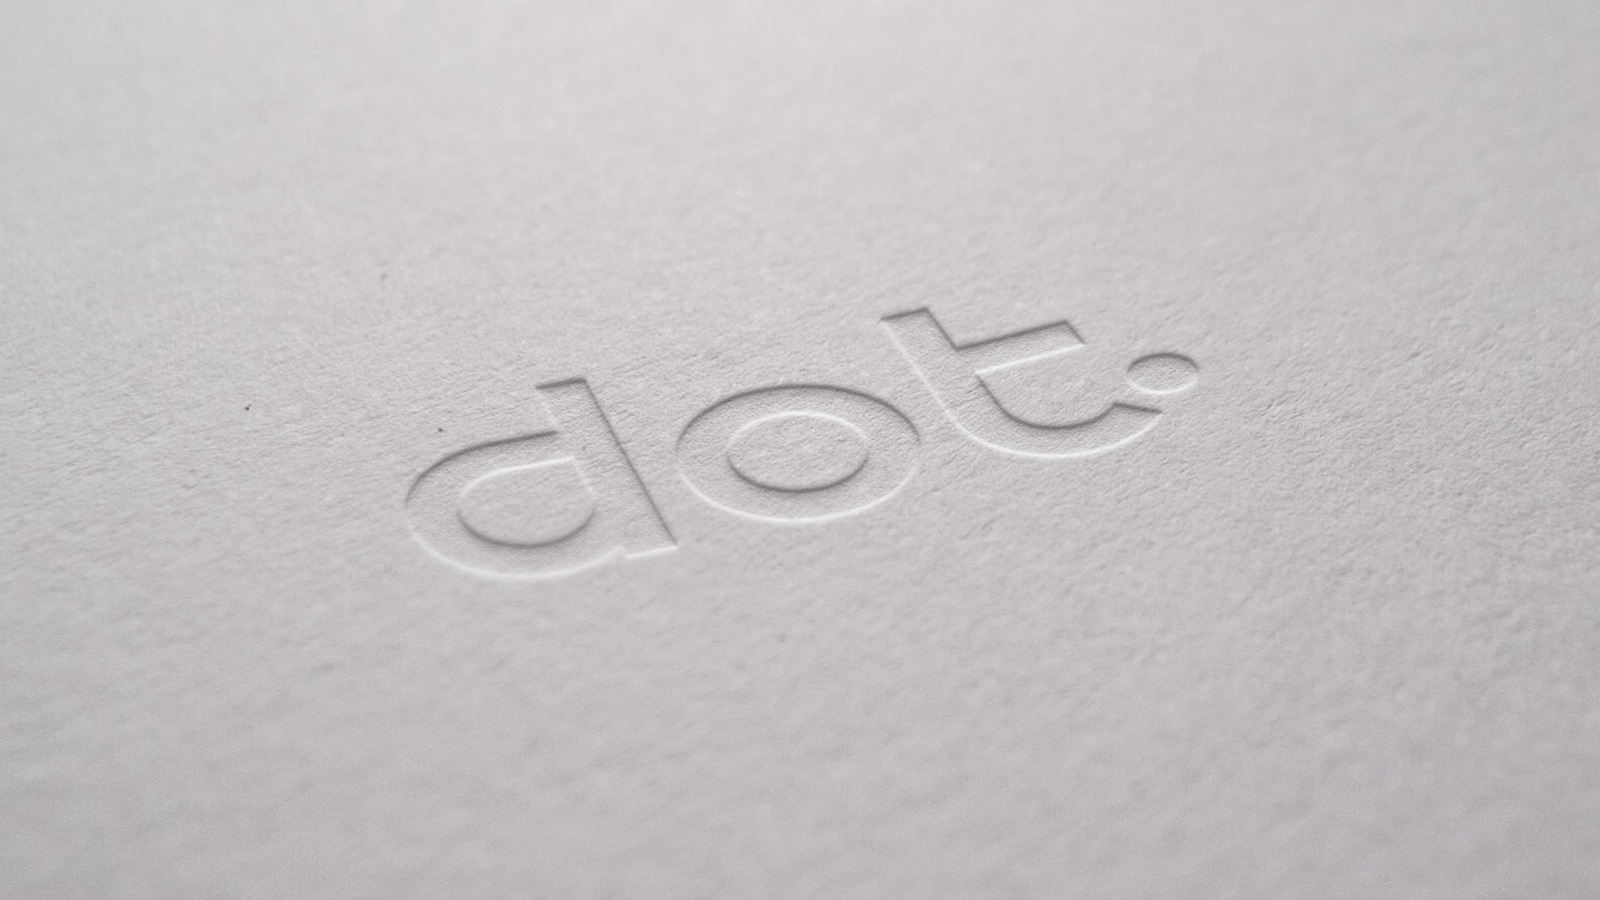 A mock of Digital Opportunity Trust logo embossed on white paper